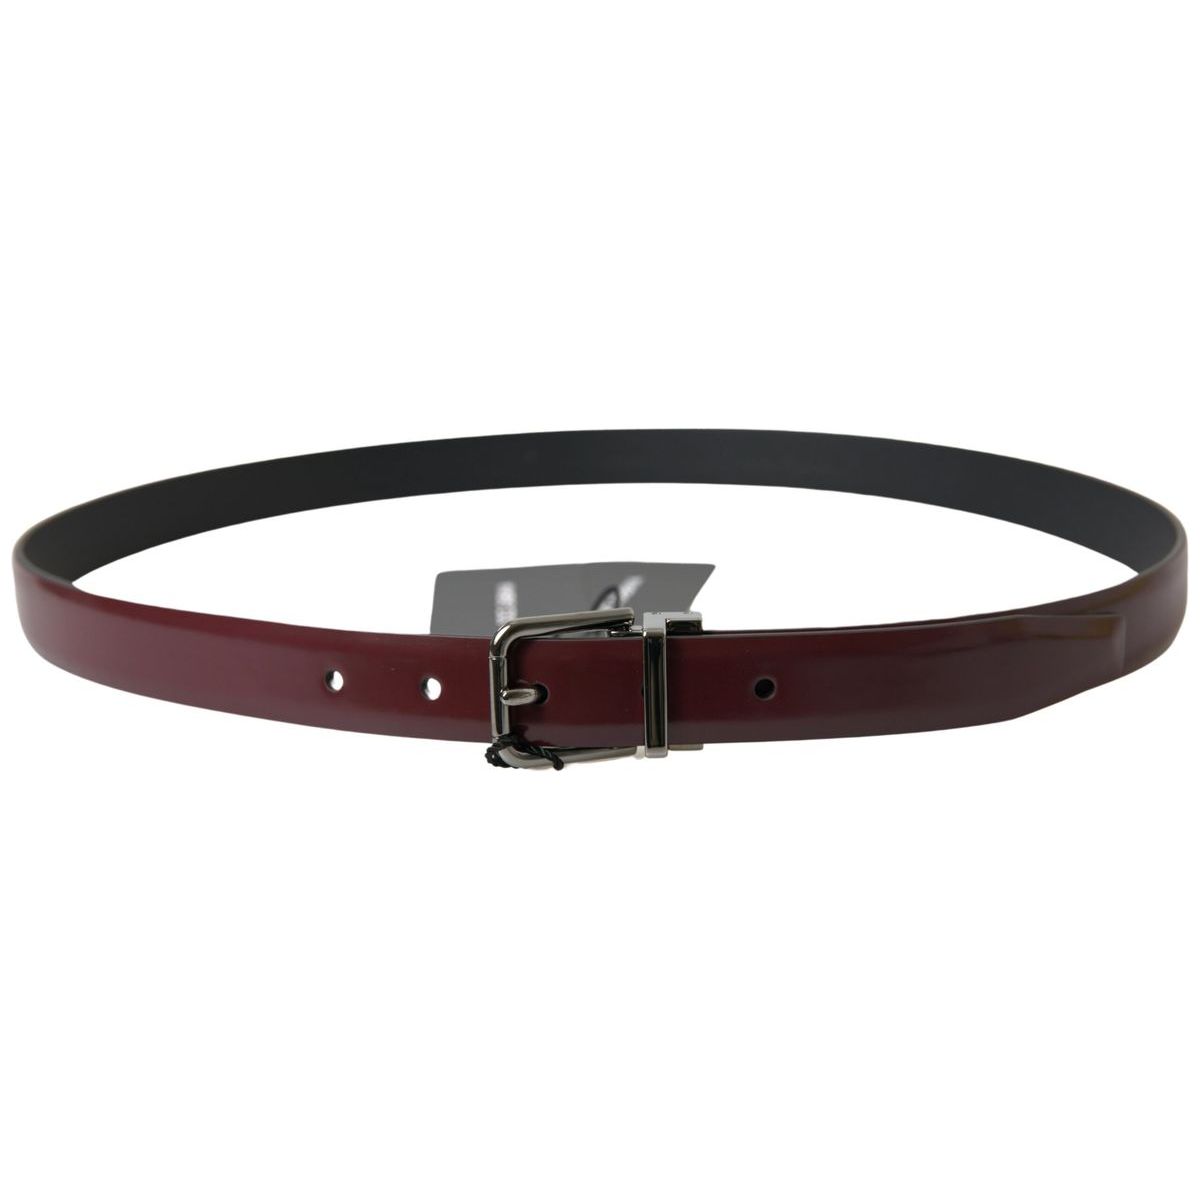 Dolce & Gabbana Elegant Bordeaux Leather Belt with Metal Buckle bordeaux-leather-silver-metal-buckle-belt 465A5145-scaled-0ba3dfd0-6c4.jpg